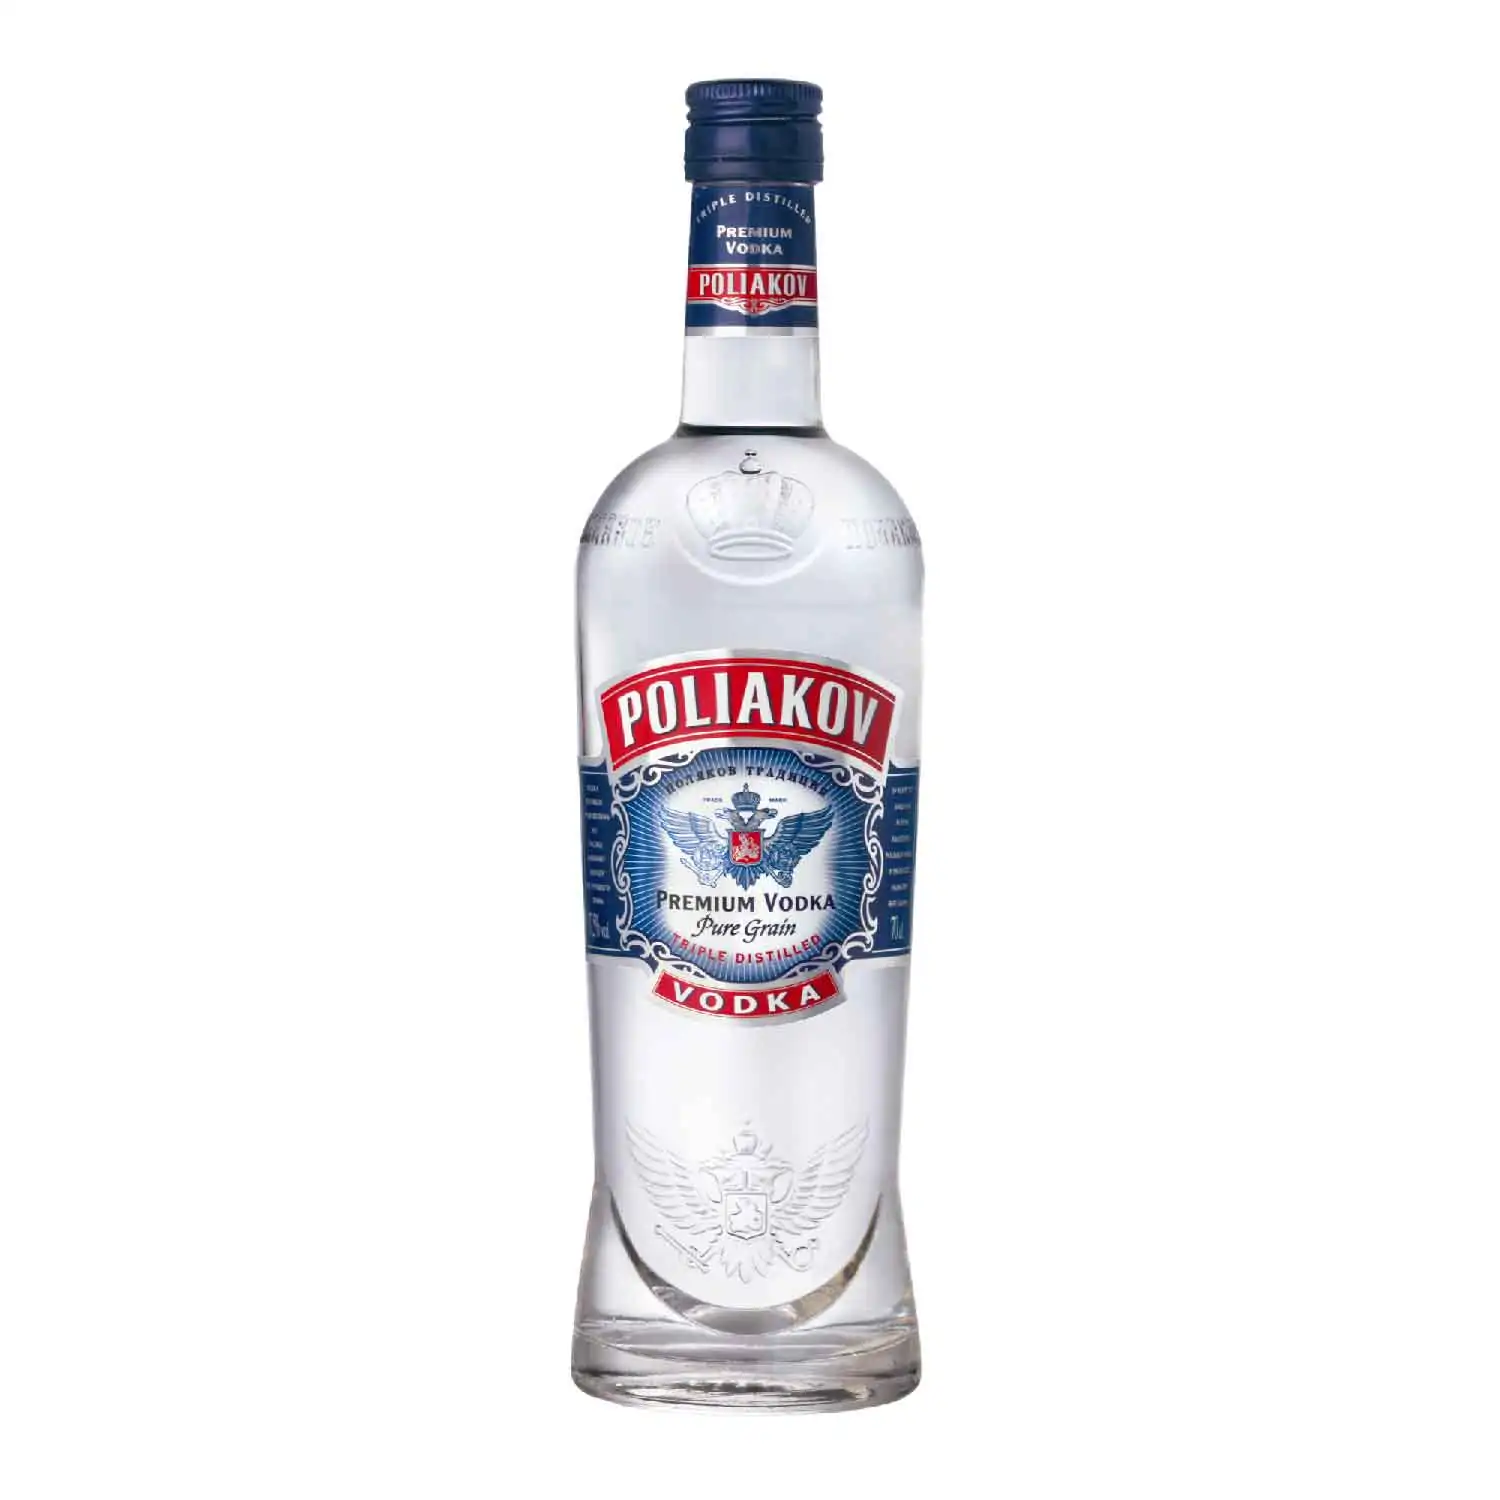 Poliakov vodka 1l Alc 37,5%